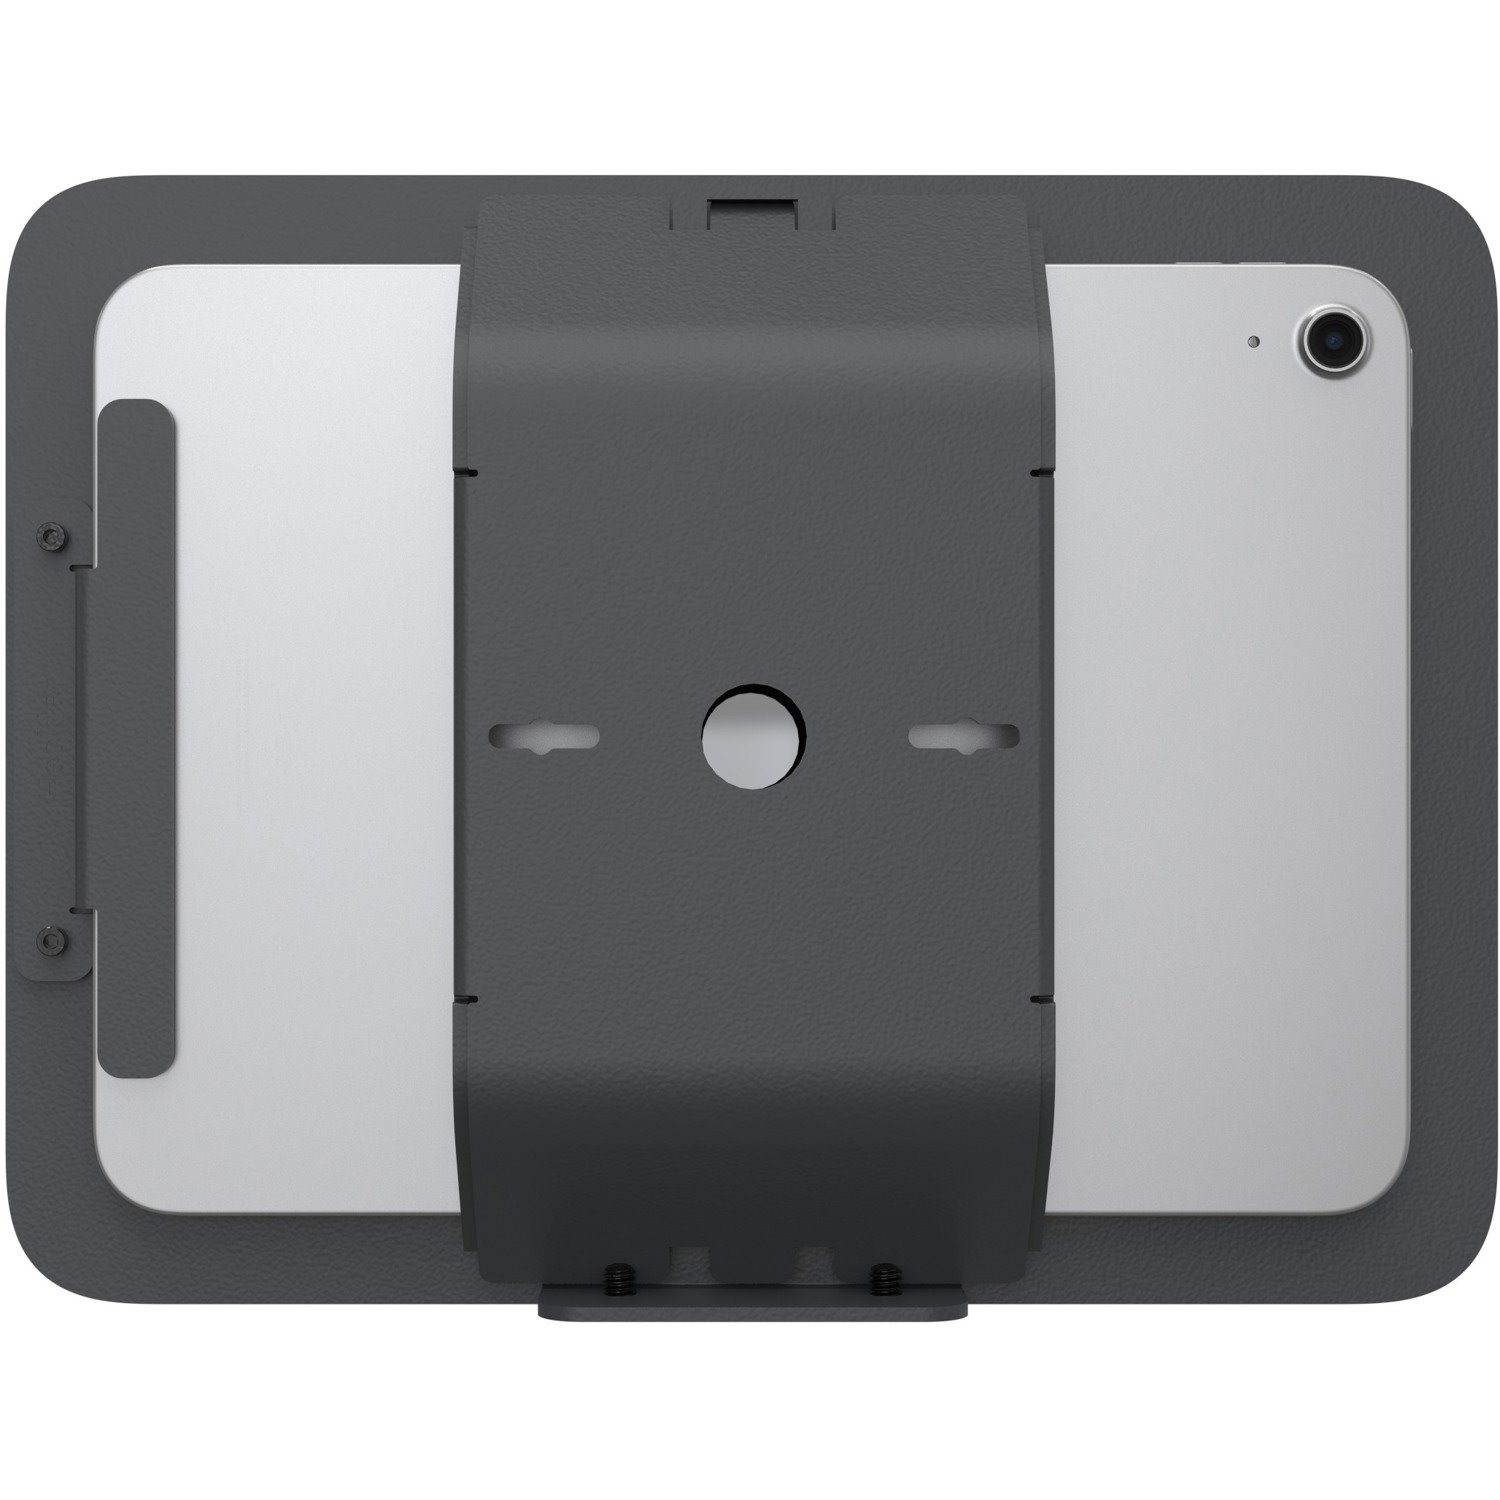 Heckler Design Wall Mount for Tablet, Network Adapter, PoE Injector - Black Gray